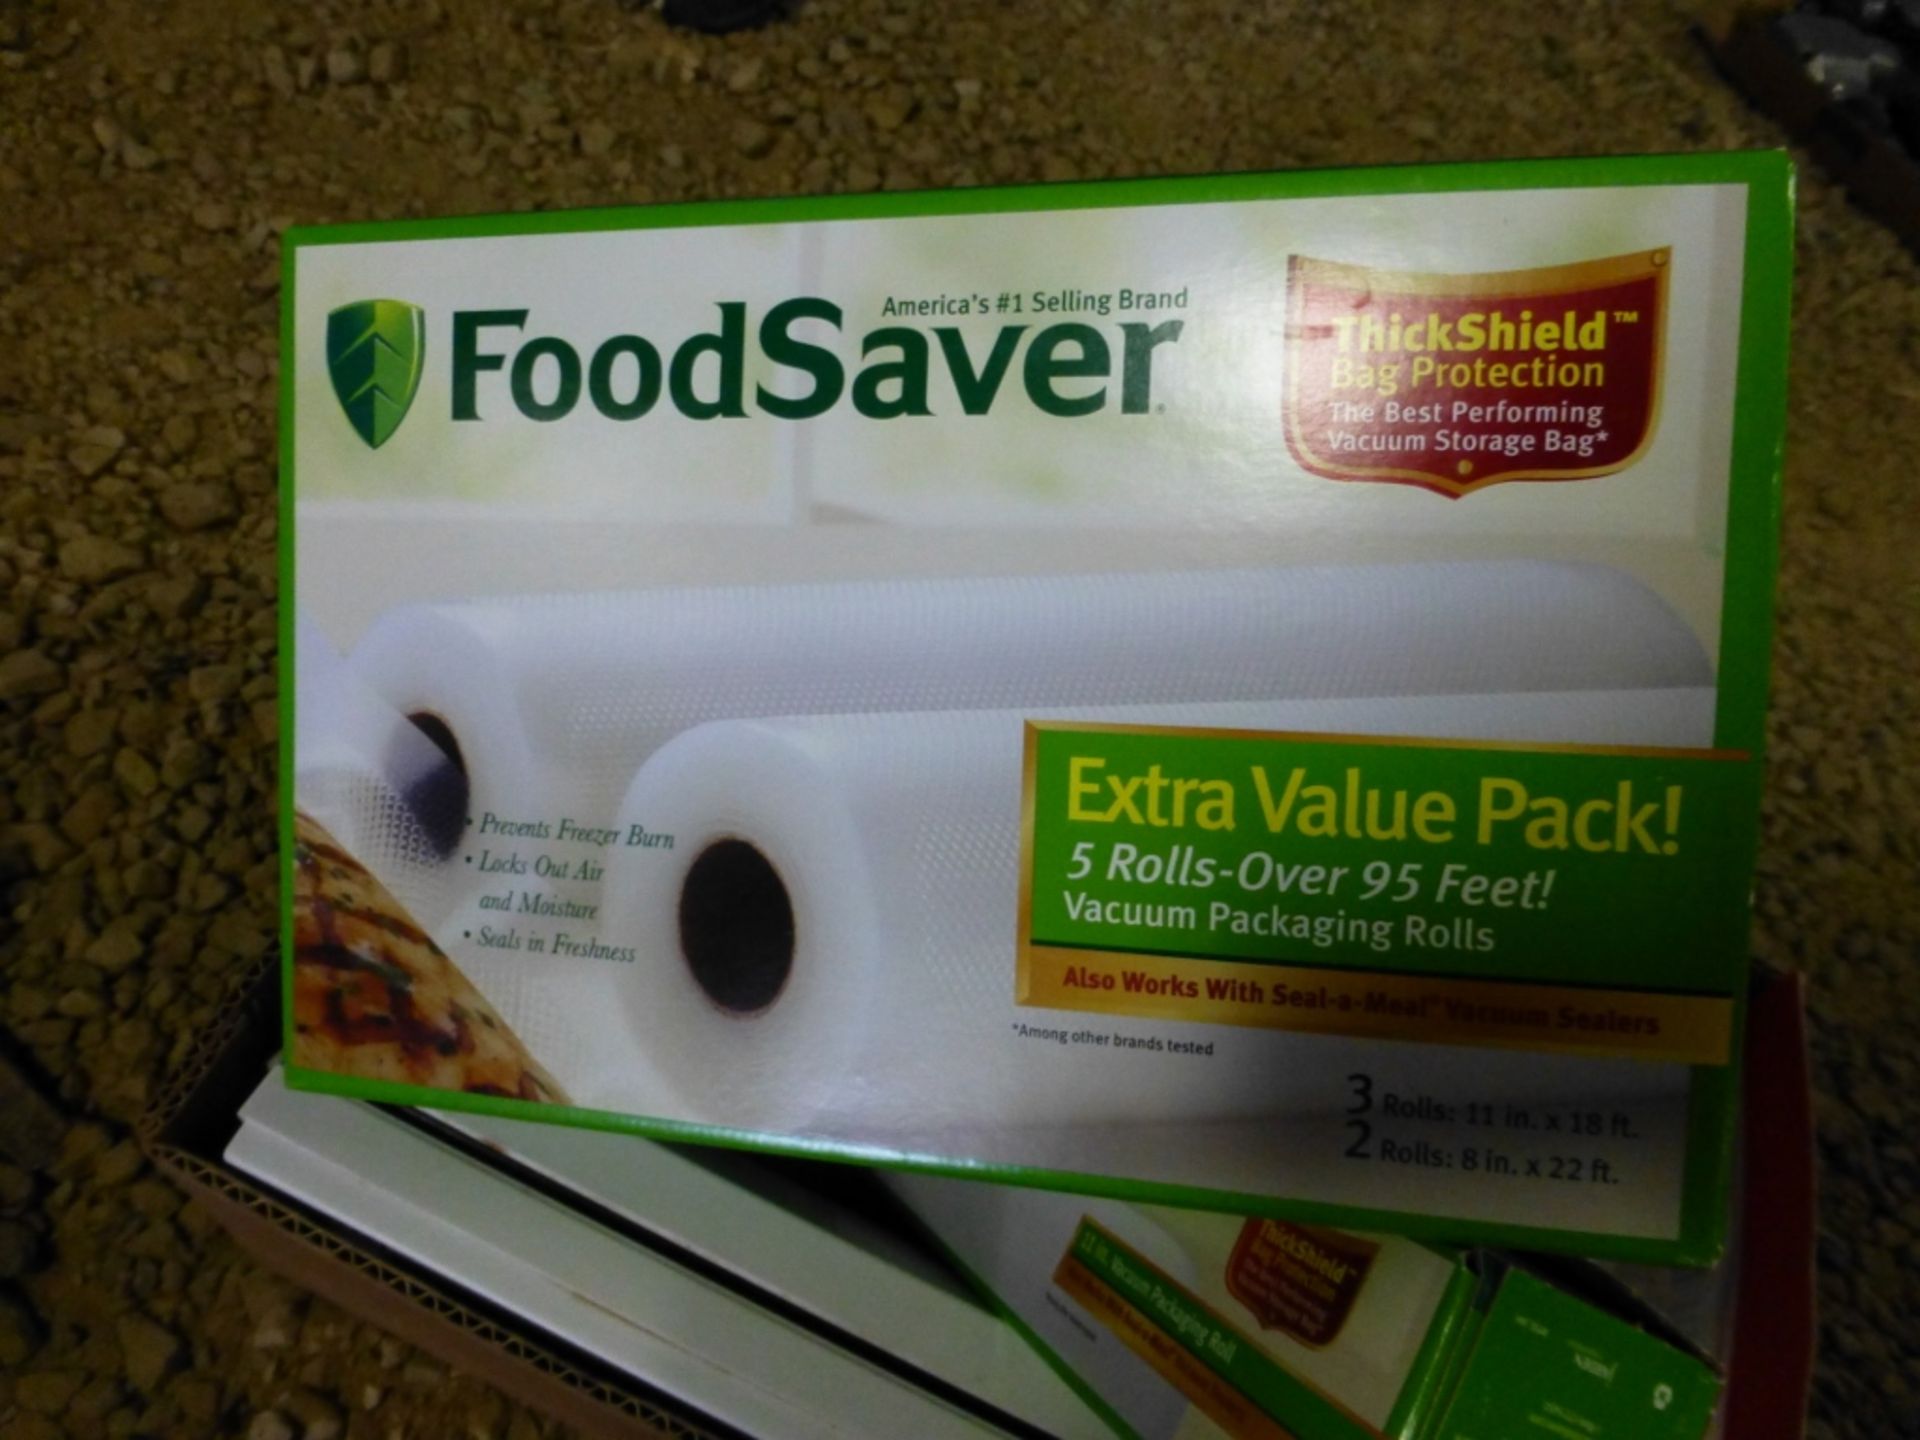 Foodsaver vacuum sealer with packaging rolls - Image 4 of 4